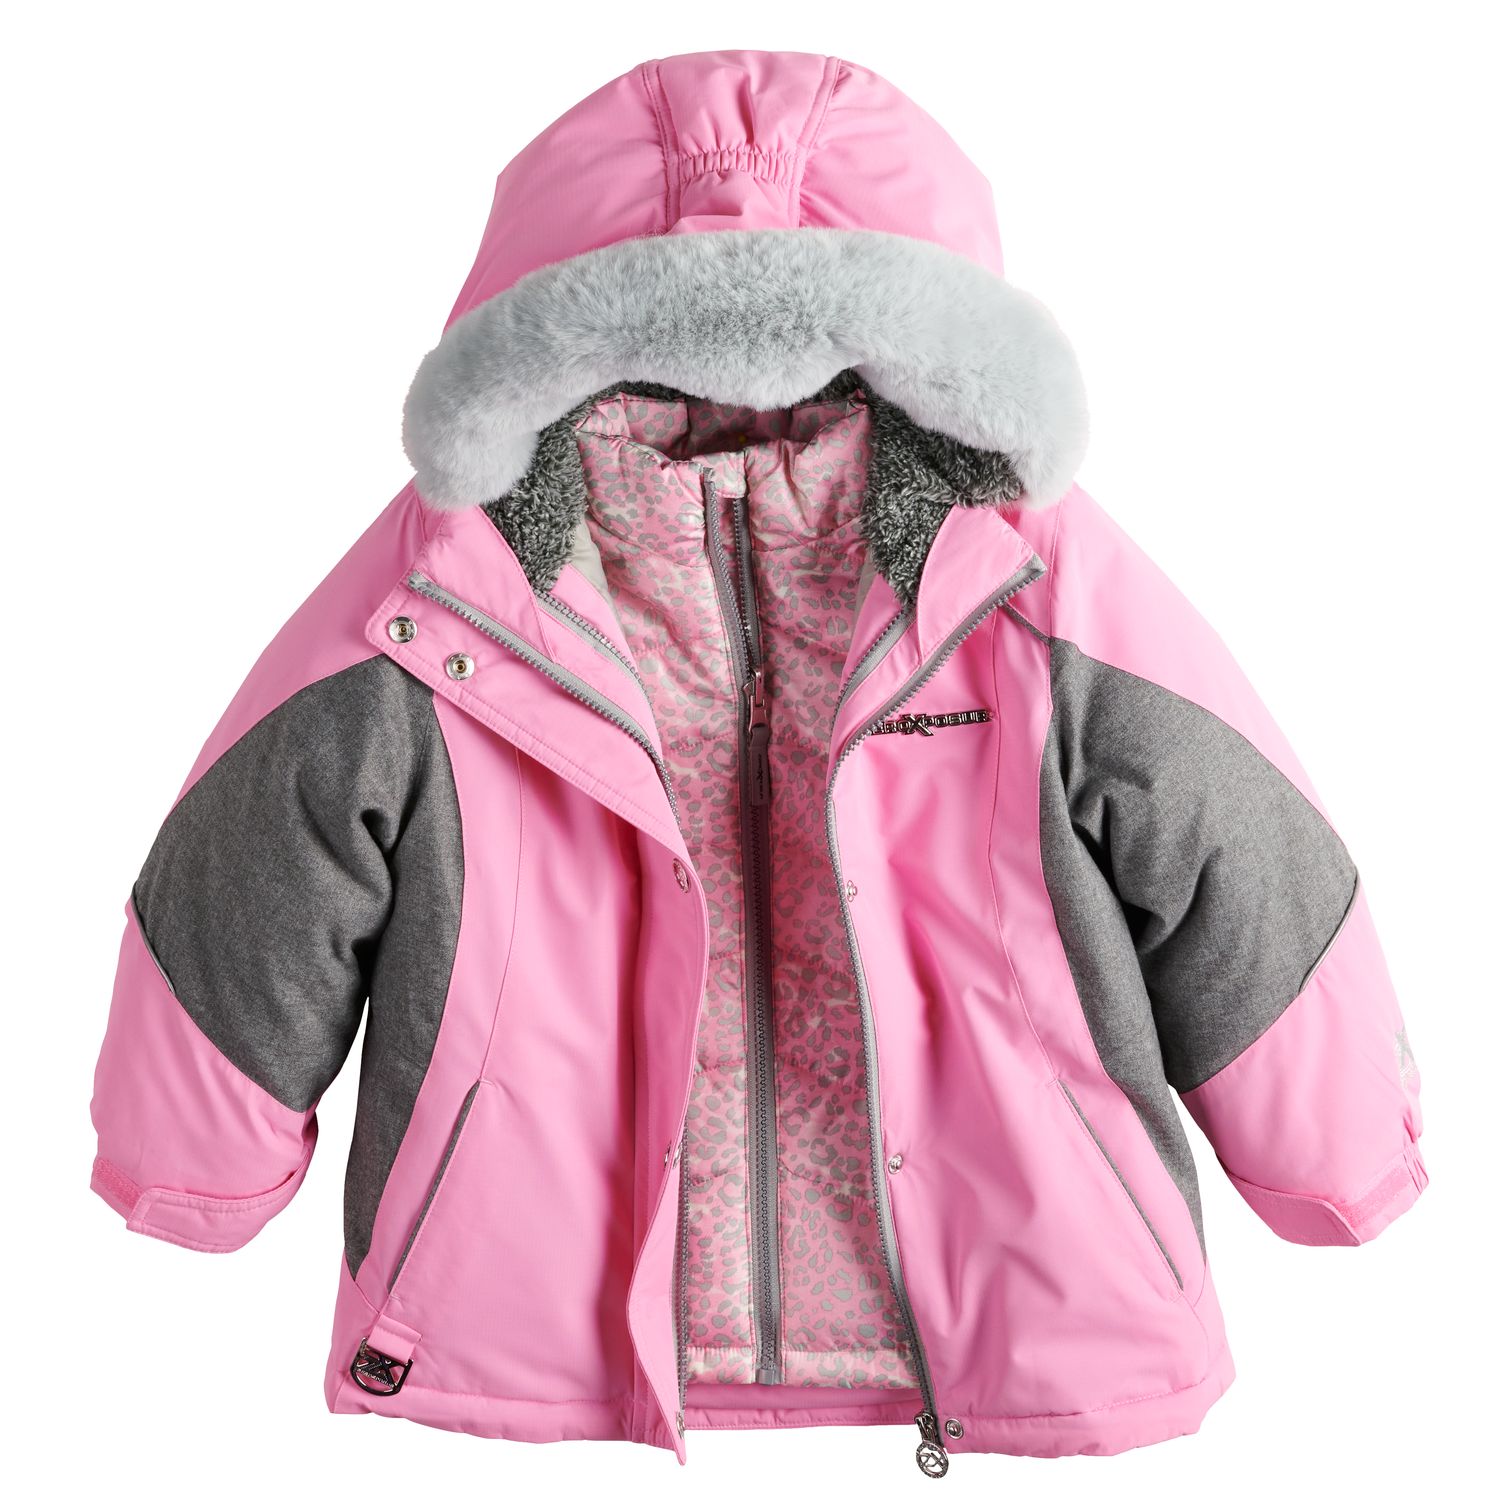 Girls' Winter Coats \u0026 Jackets: Find 